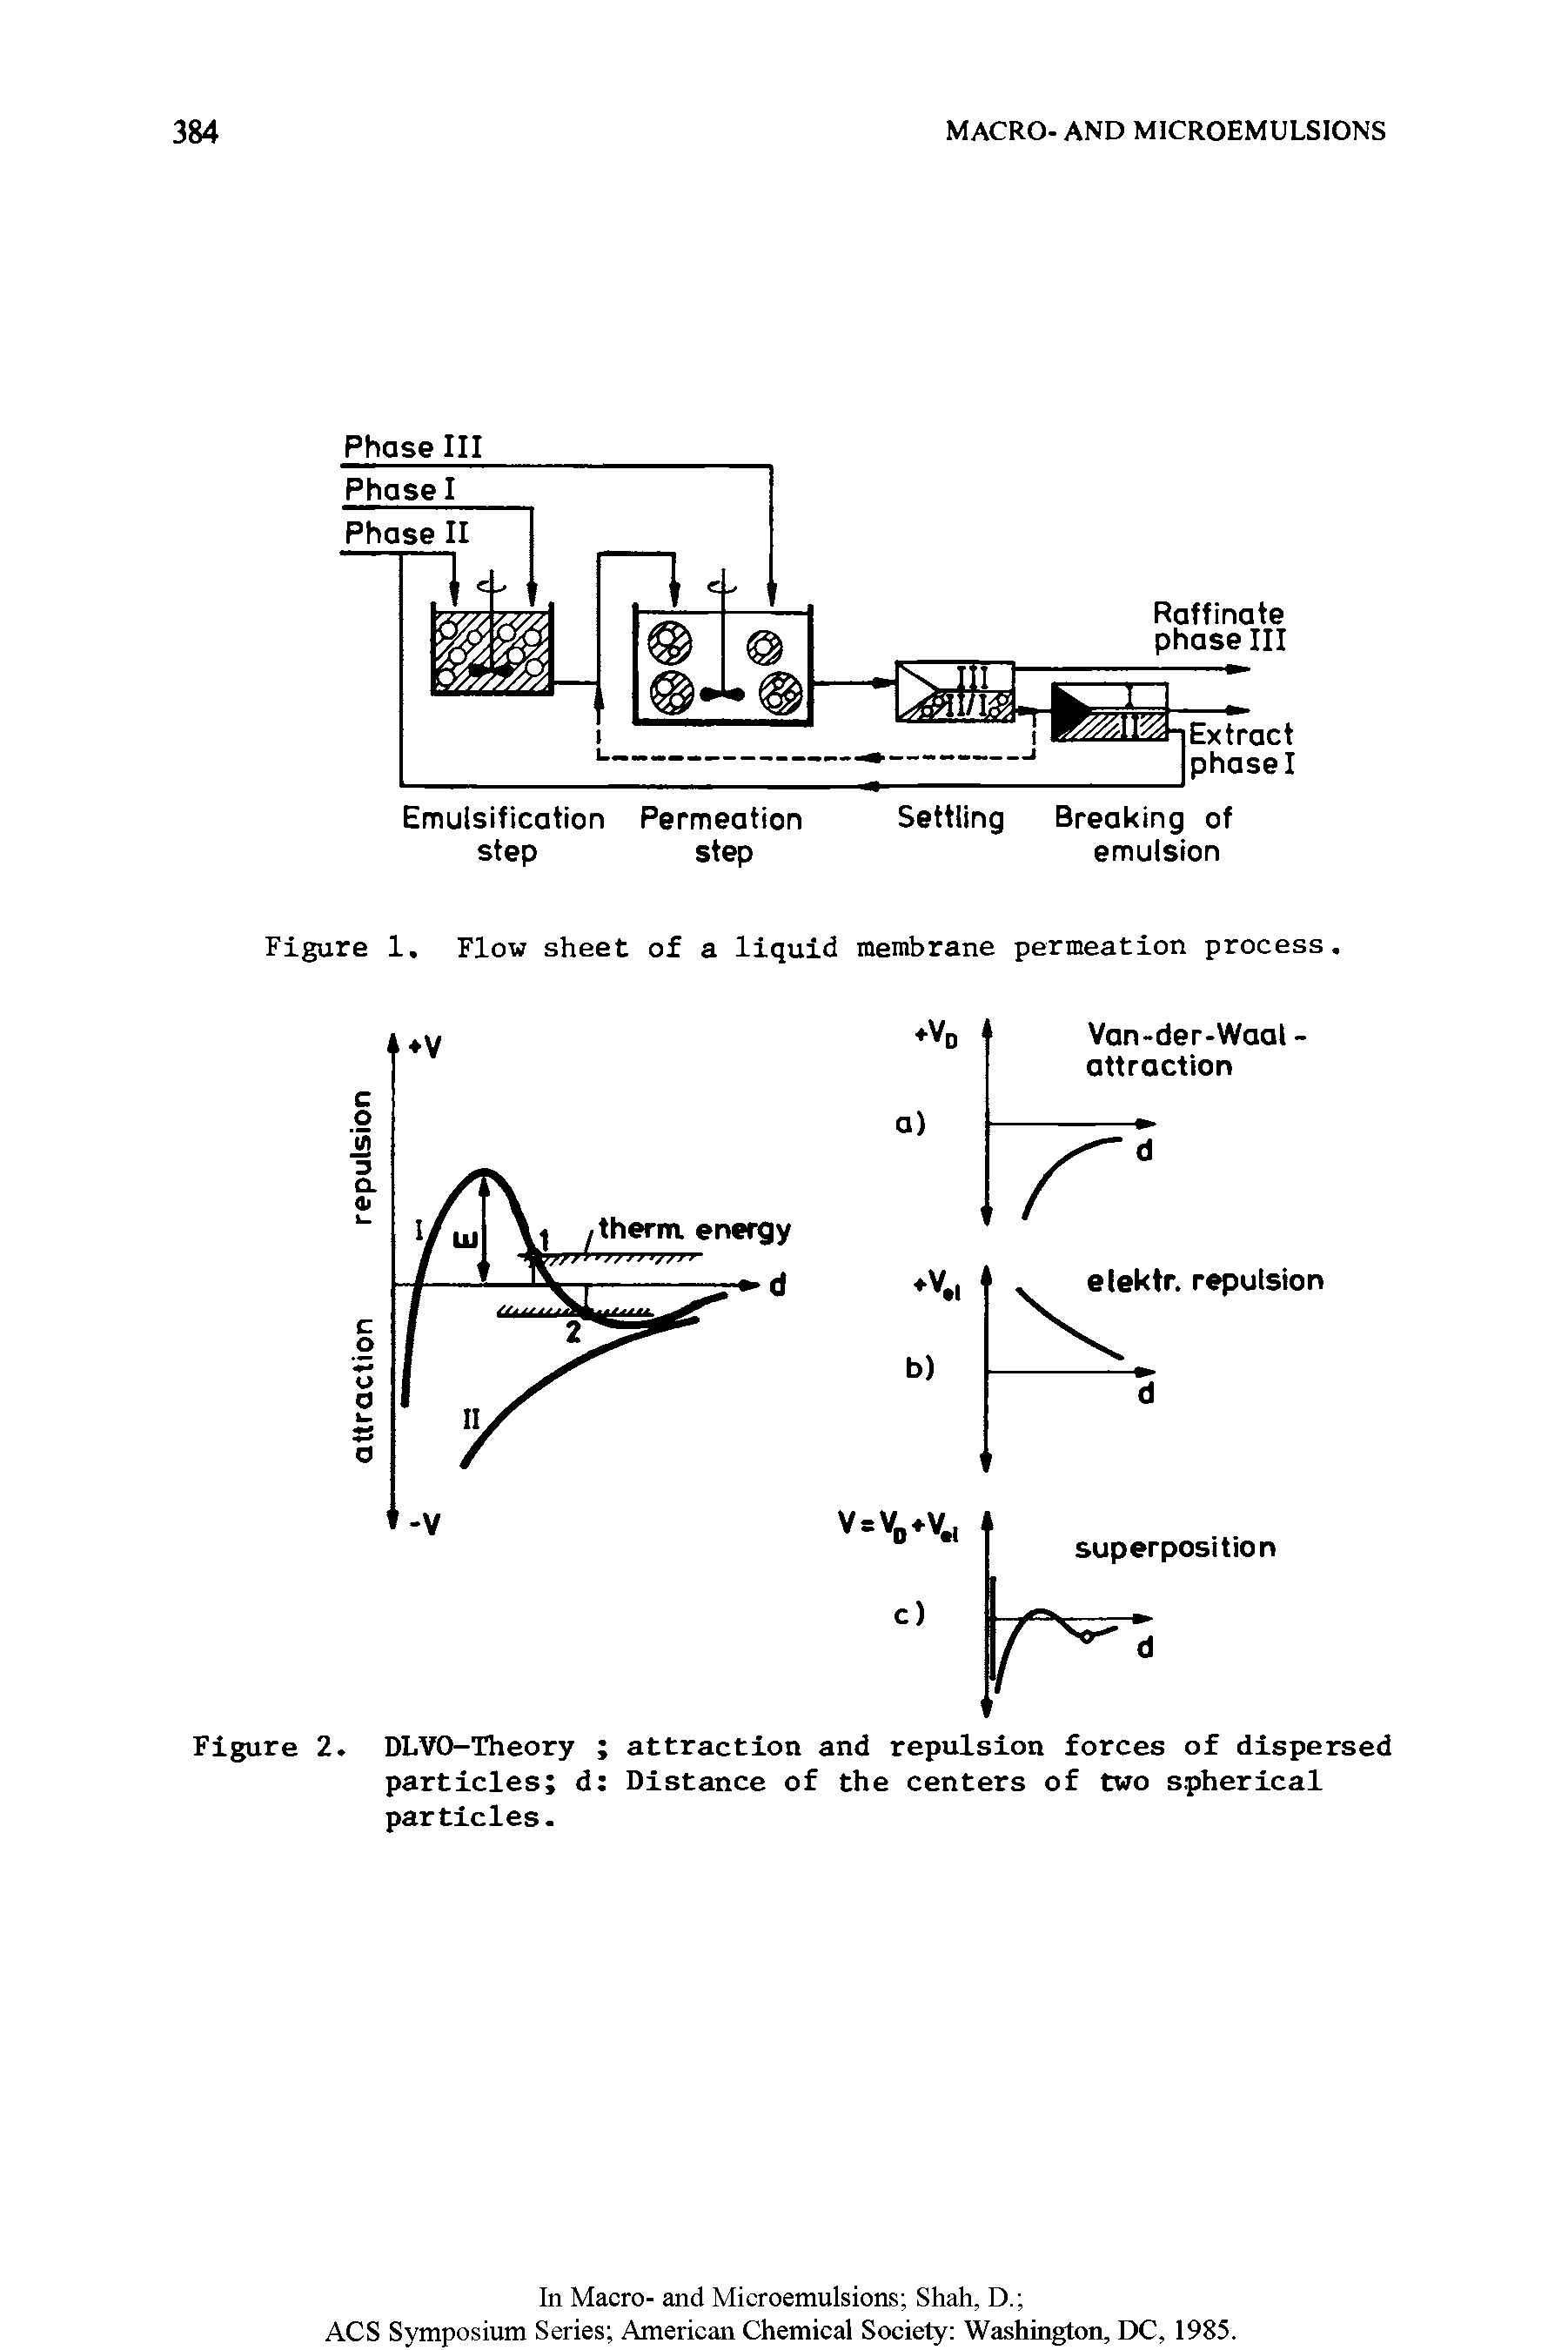 Figure 1. Flow sheet of a liquid membrane permeation process.